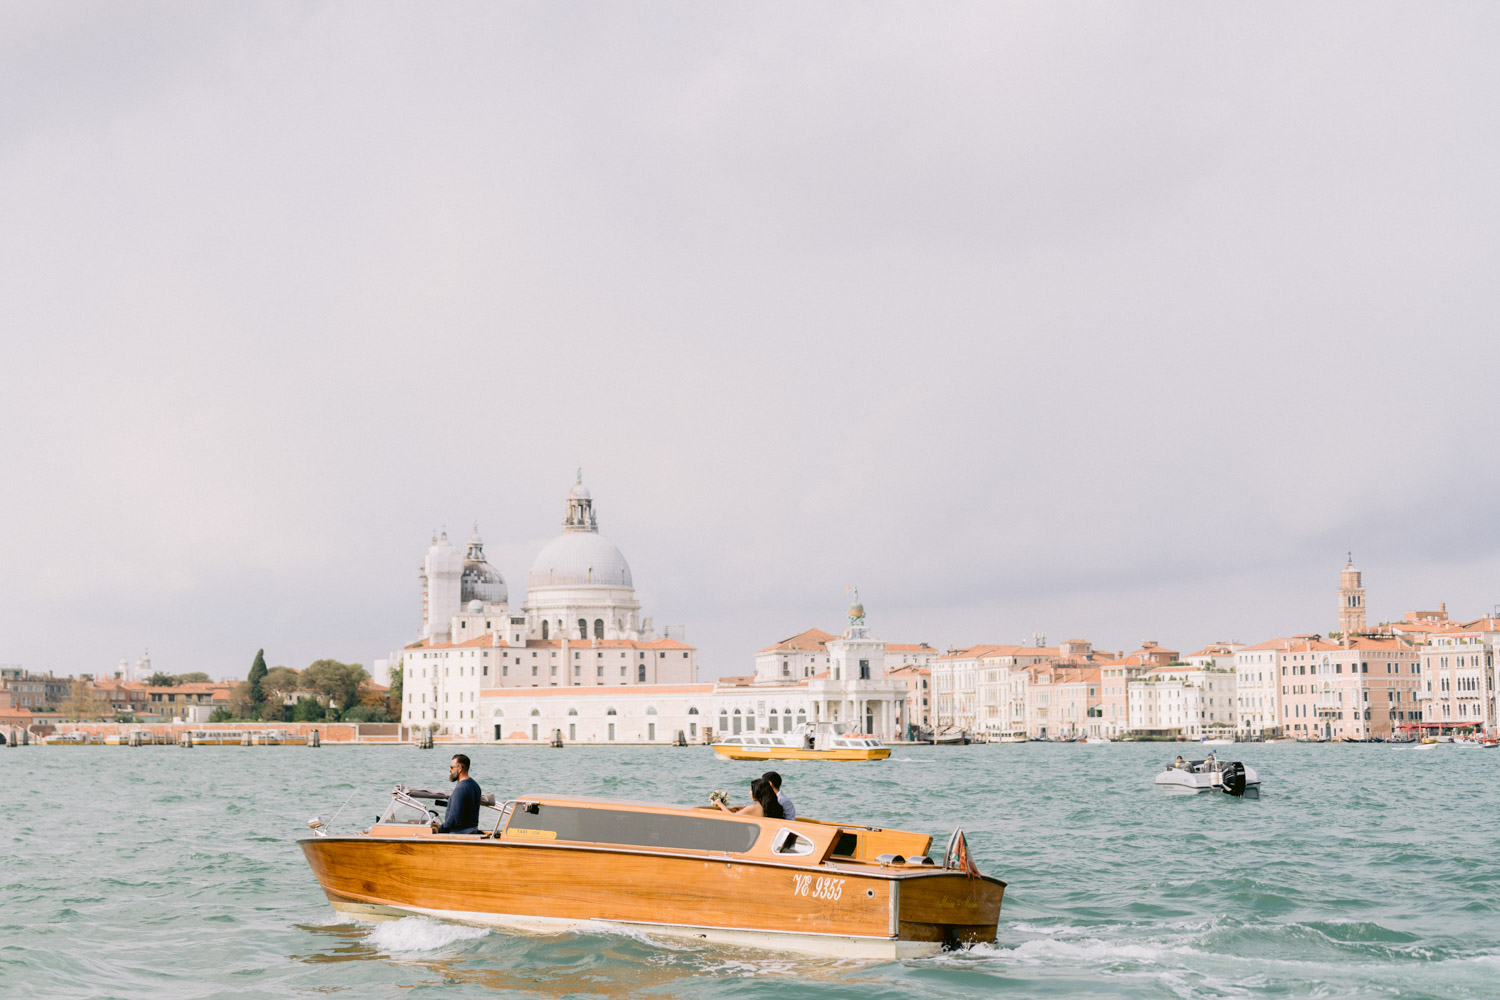 wedding photoshoot planning in Venice